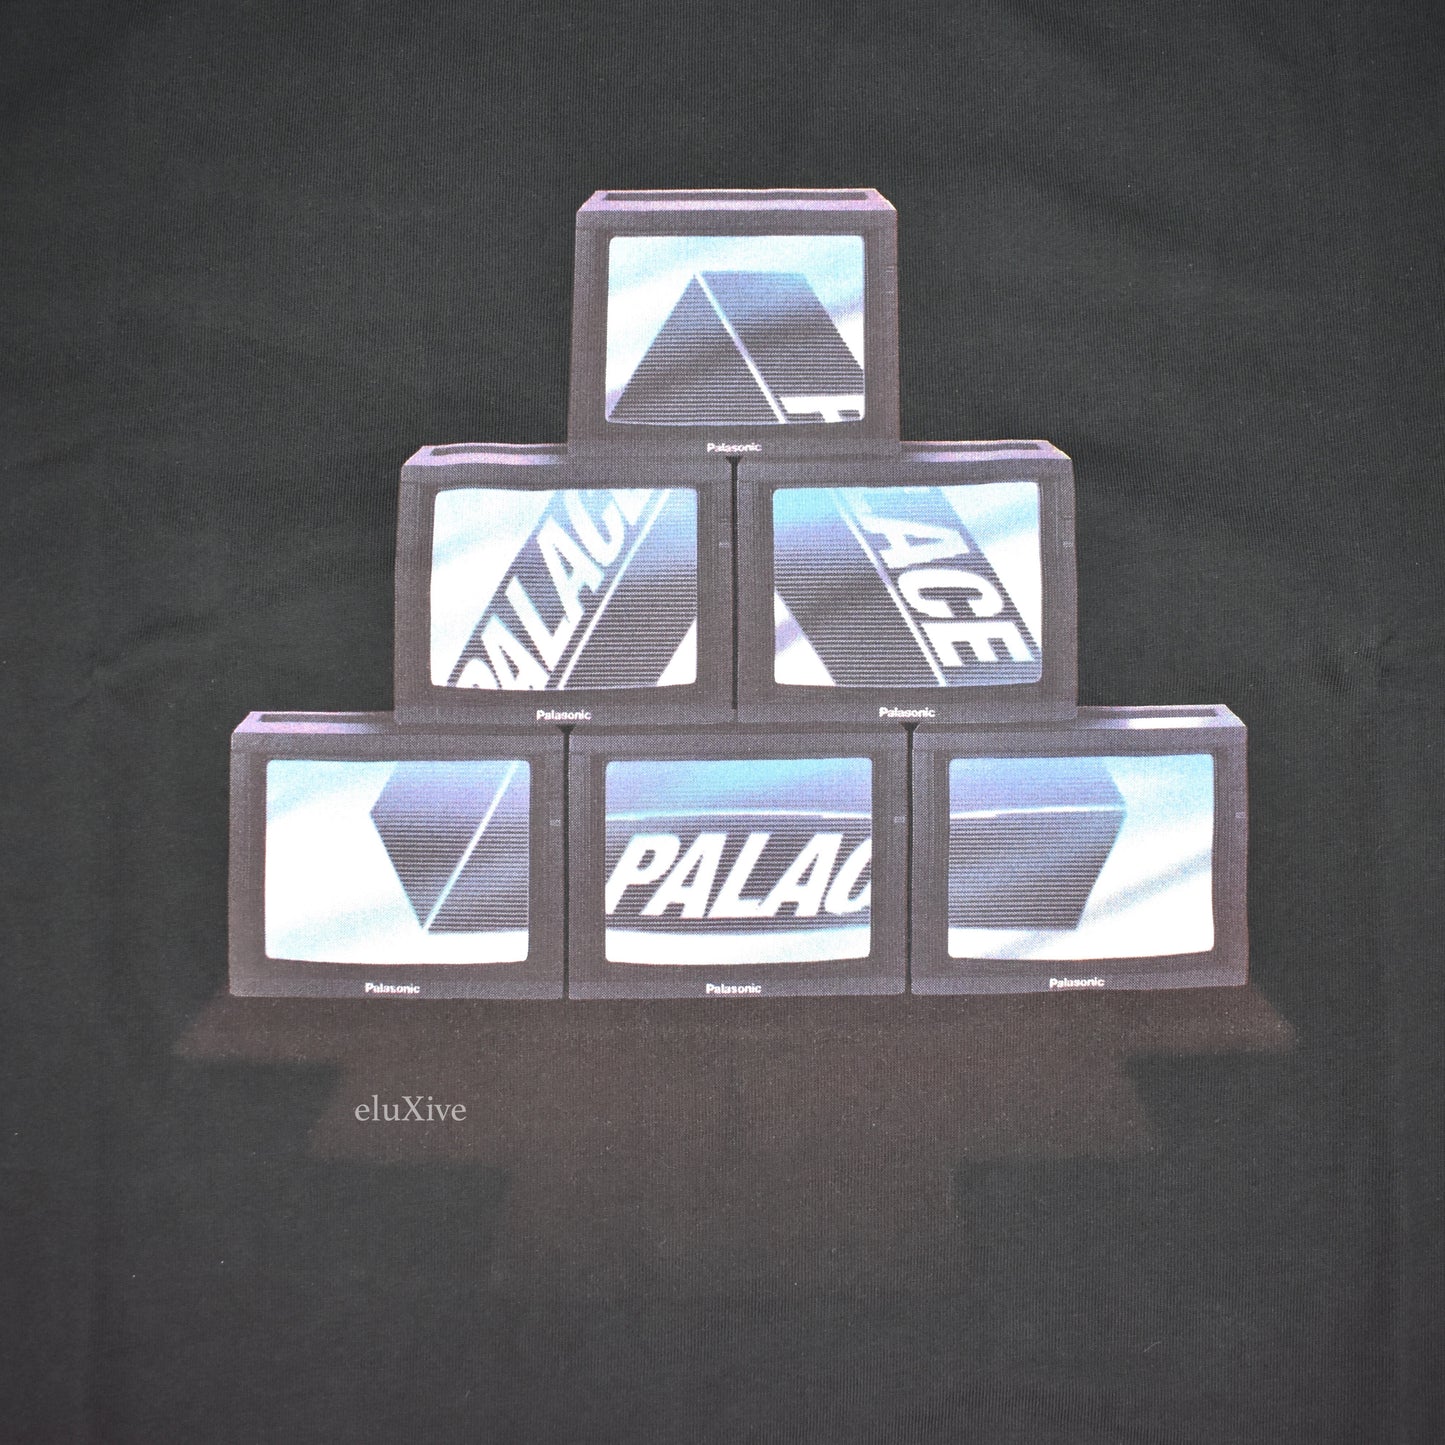 Palace - PTV Logo L/S T-Shirt (Black)